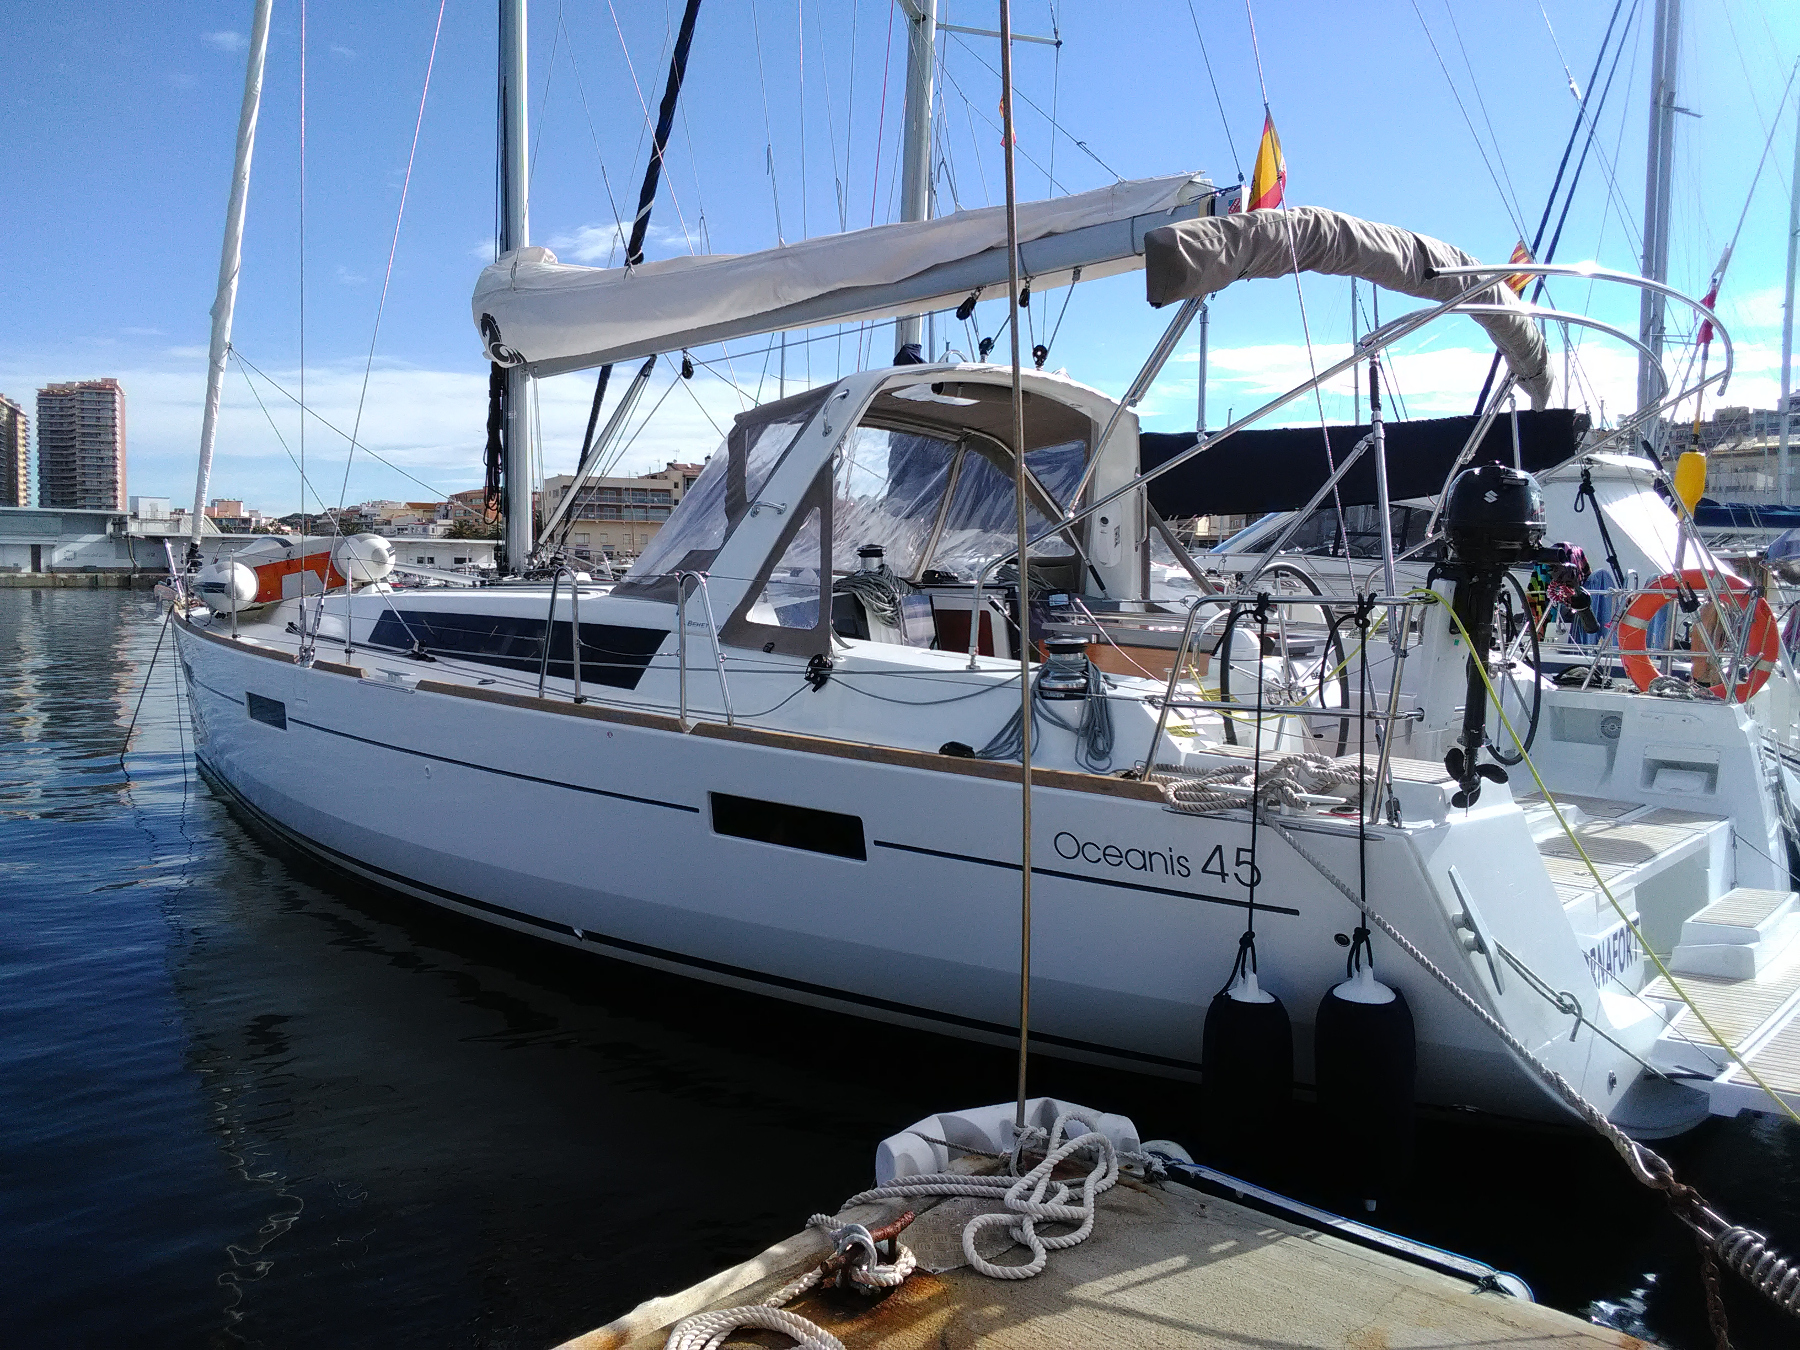 Sail boat FOR CHARTER, year 2019 brand Beneteau and model OCEANIS 45, available in Port  Marina Palamós Palamós Girona España